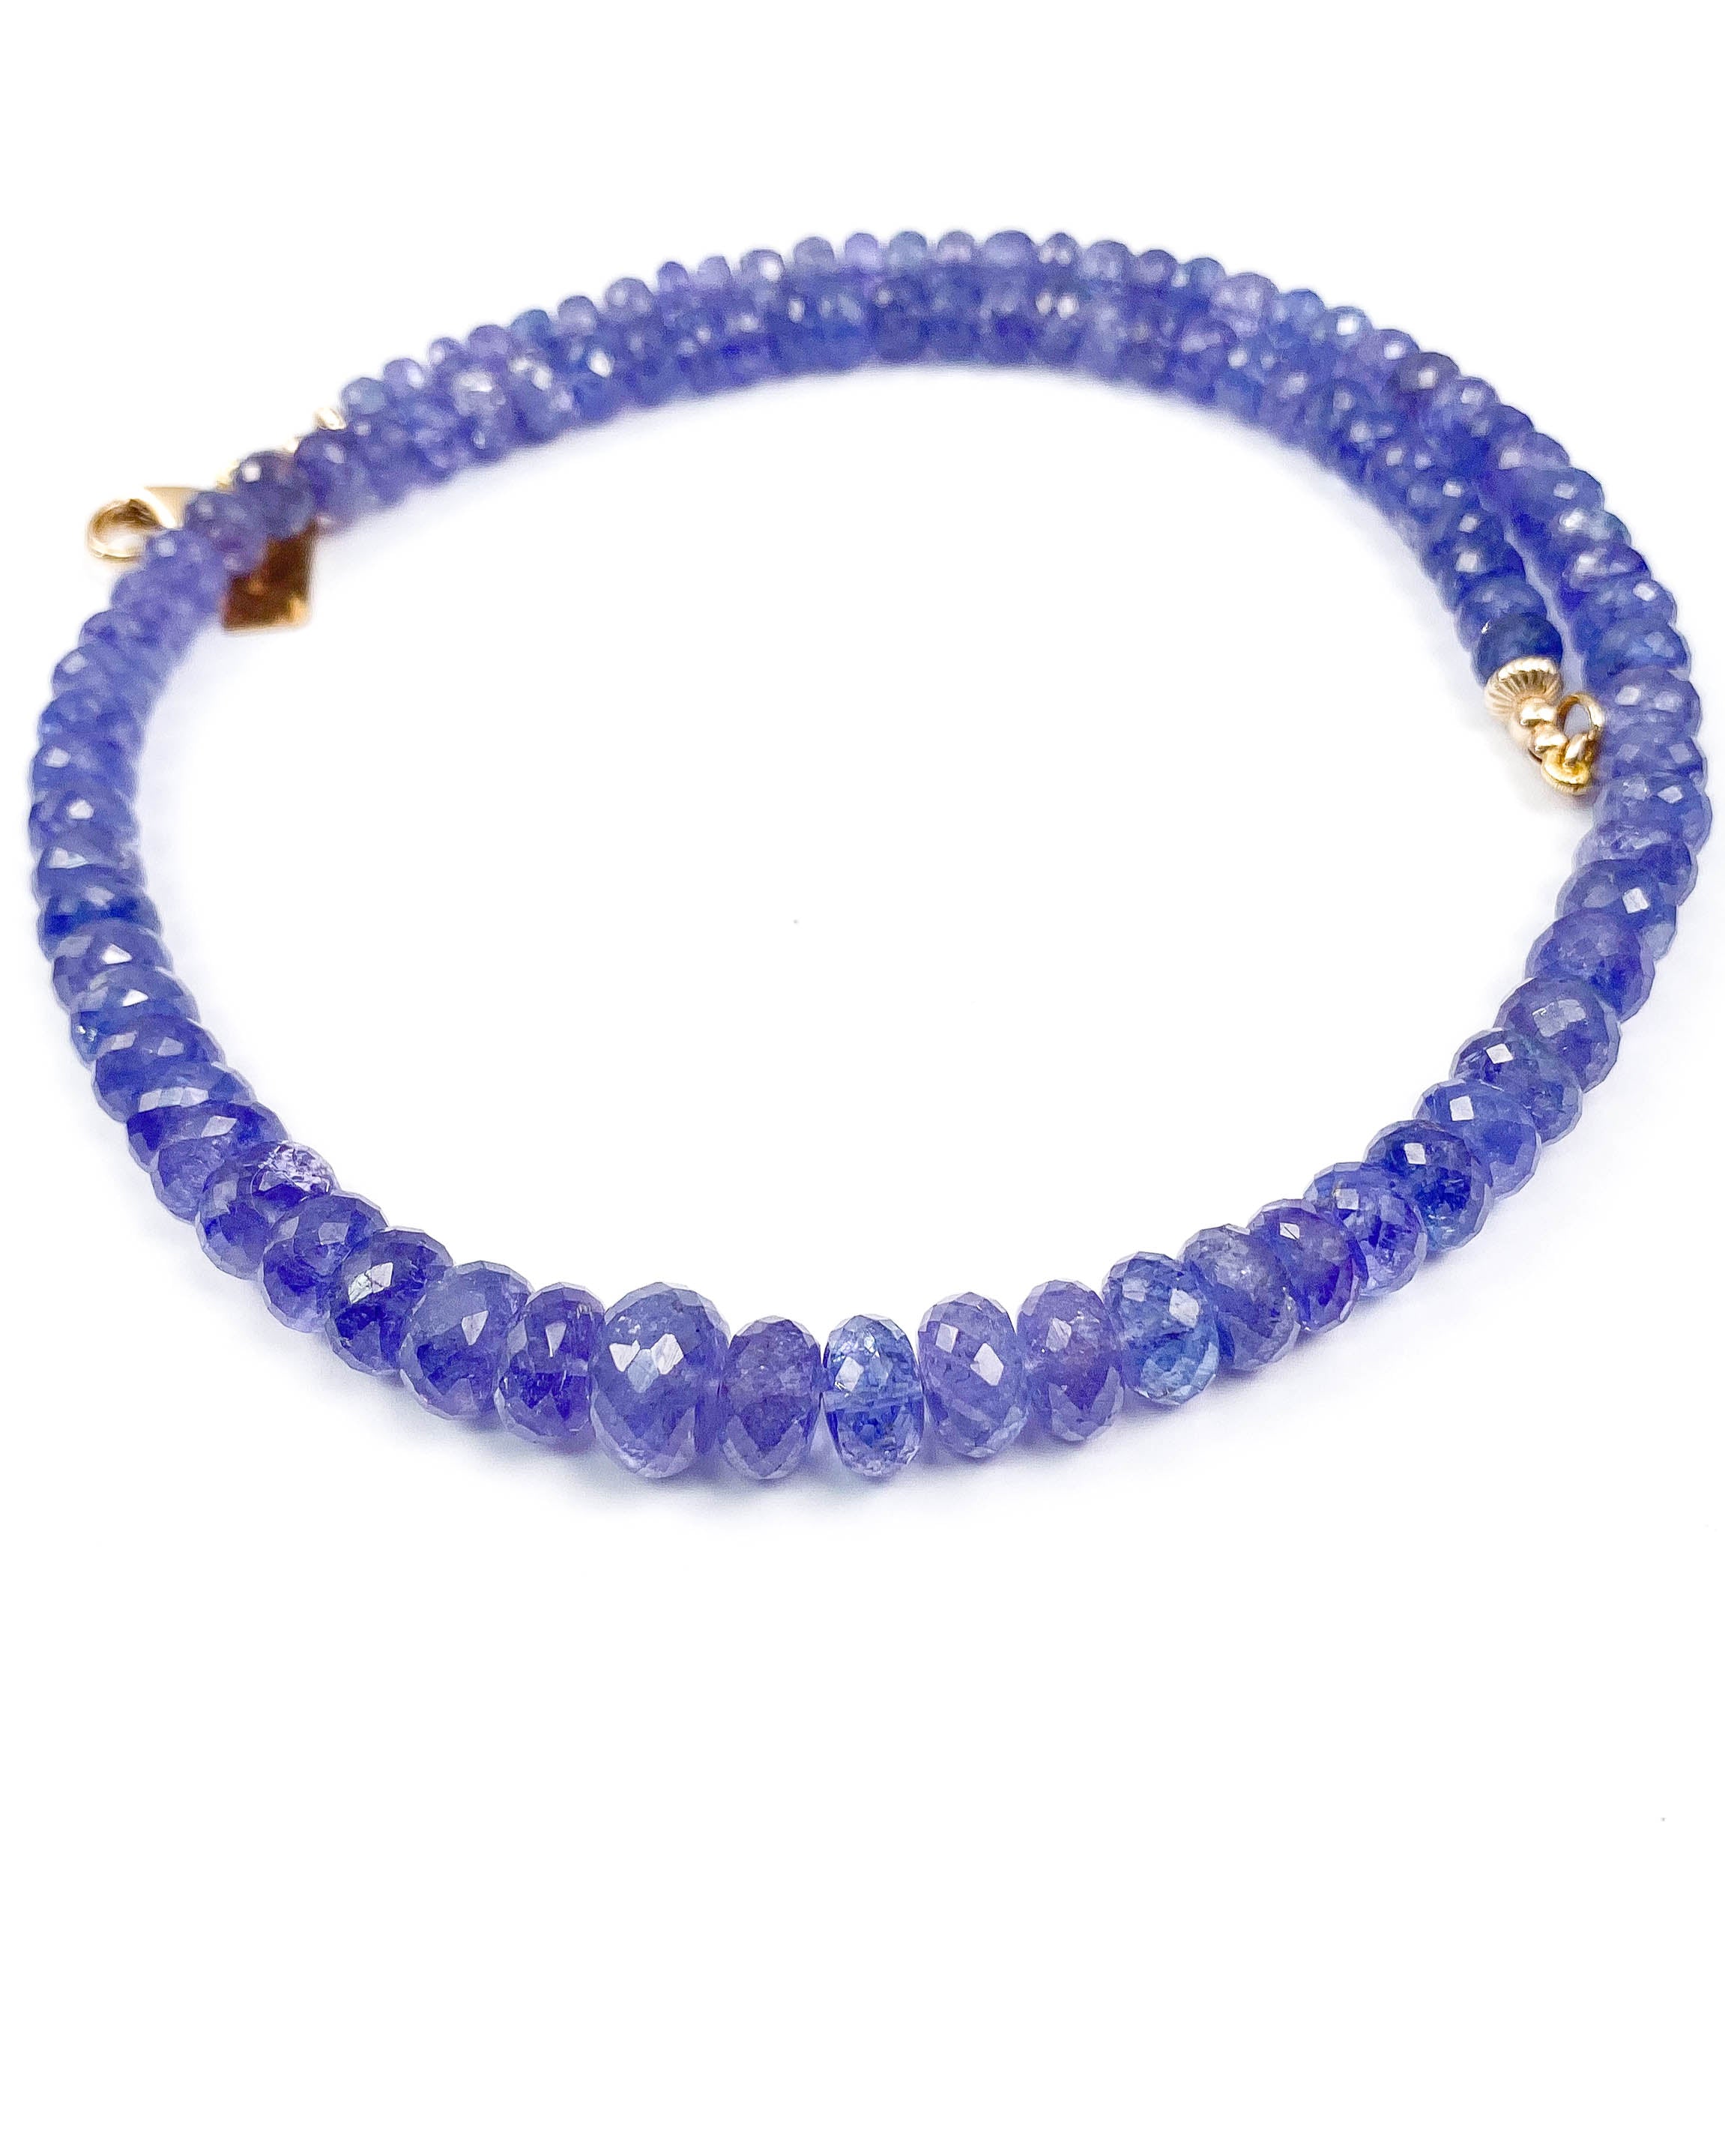 Graduated Faceted Purple Tanzanite Necklace